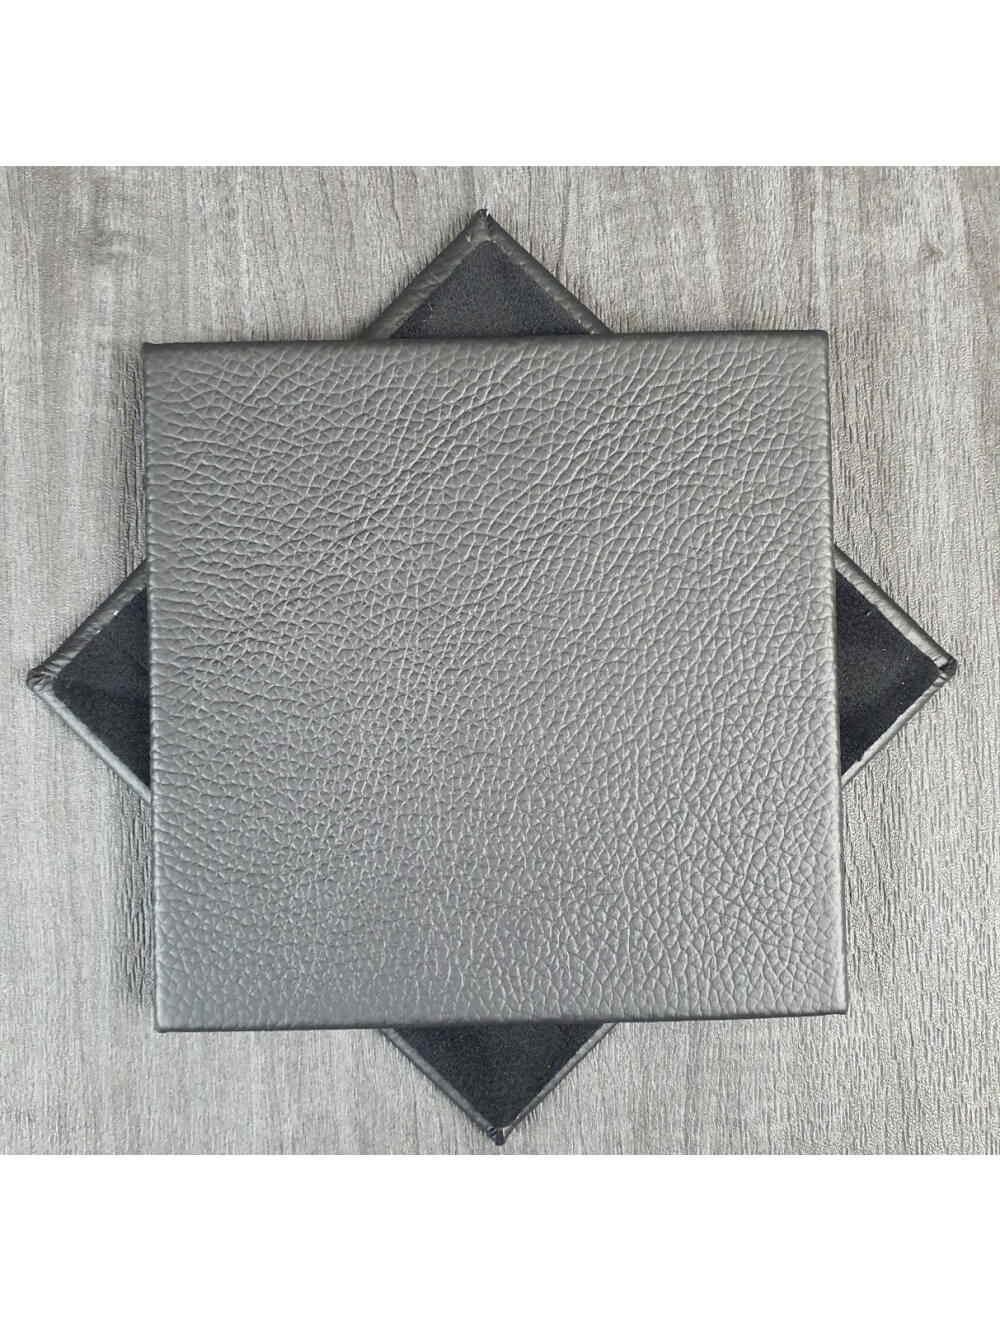 Black Shelly Leather Coaster - 10cm Sq (myydään)